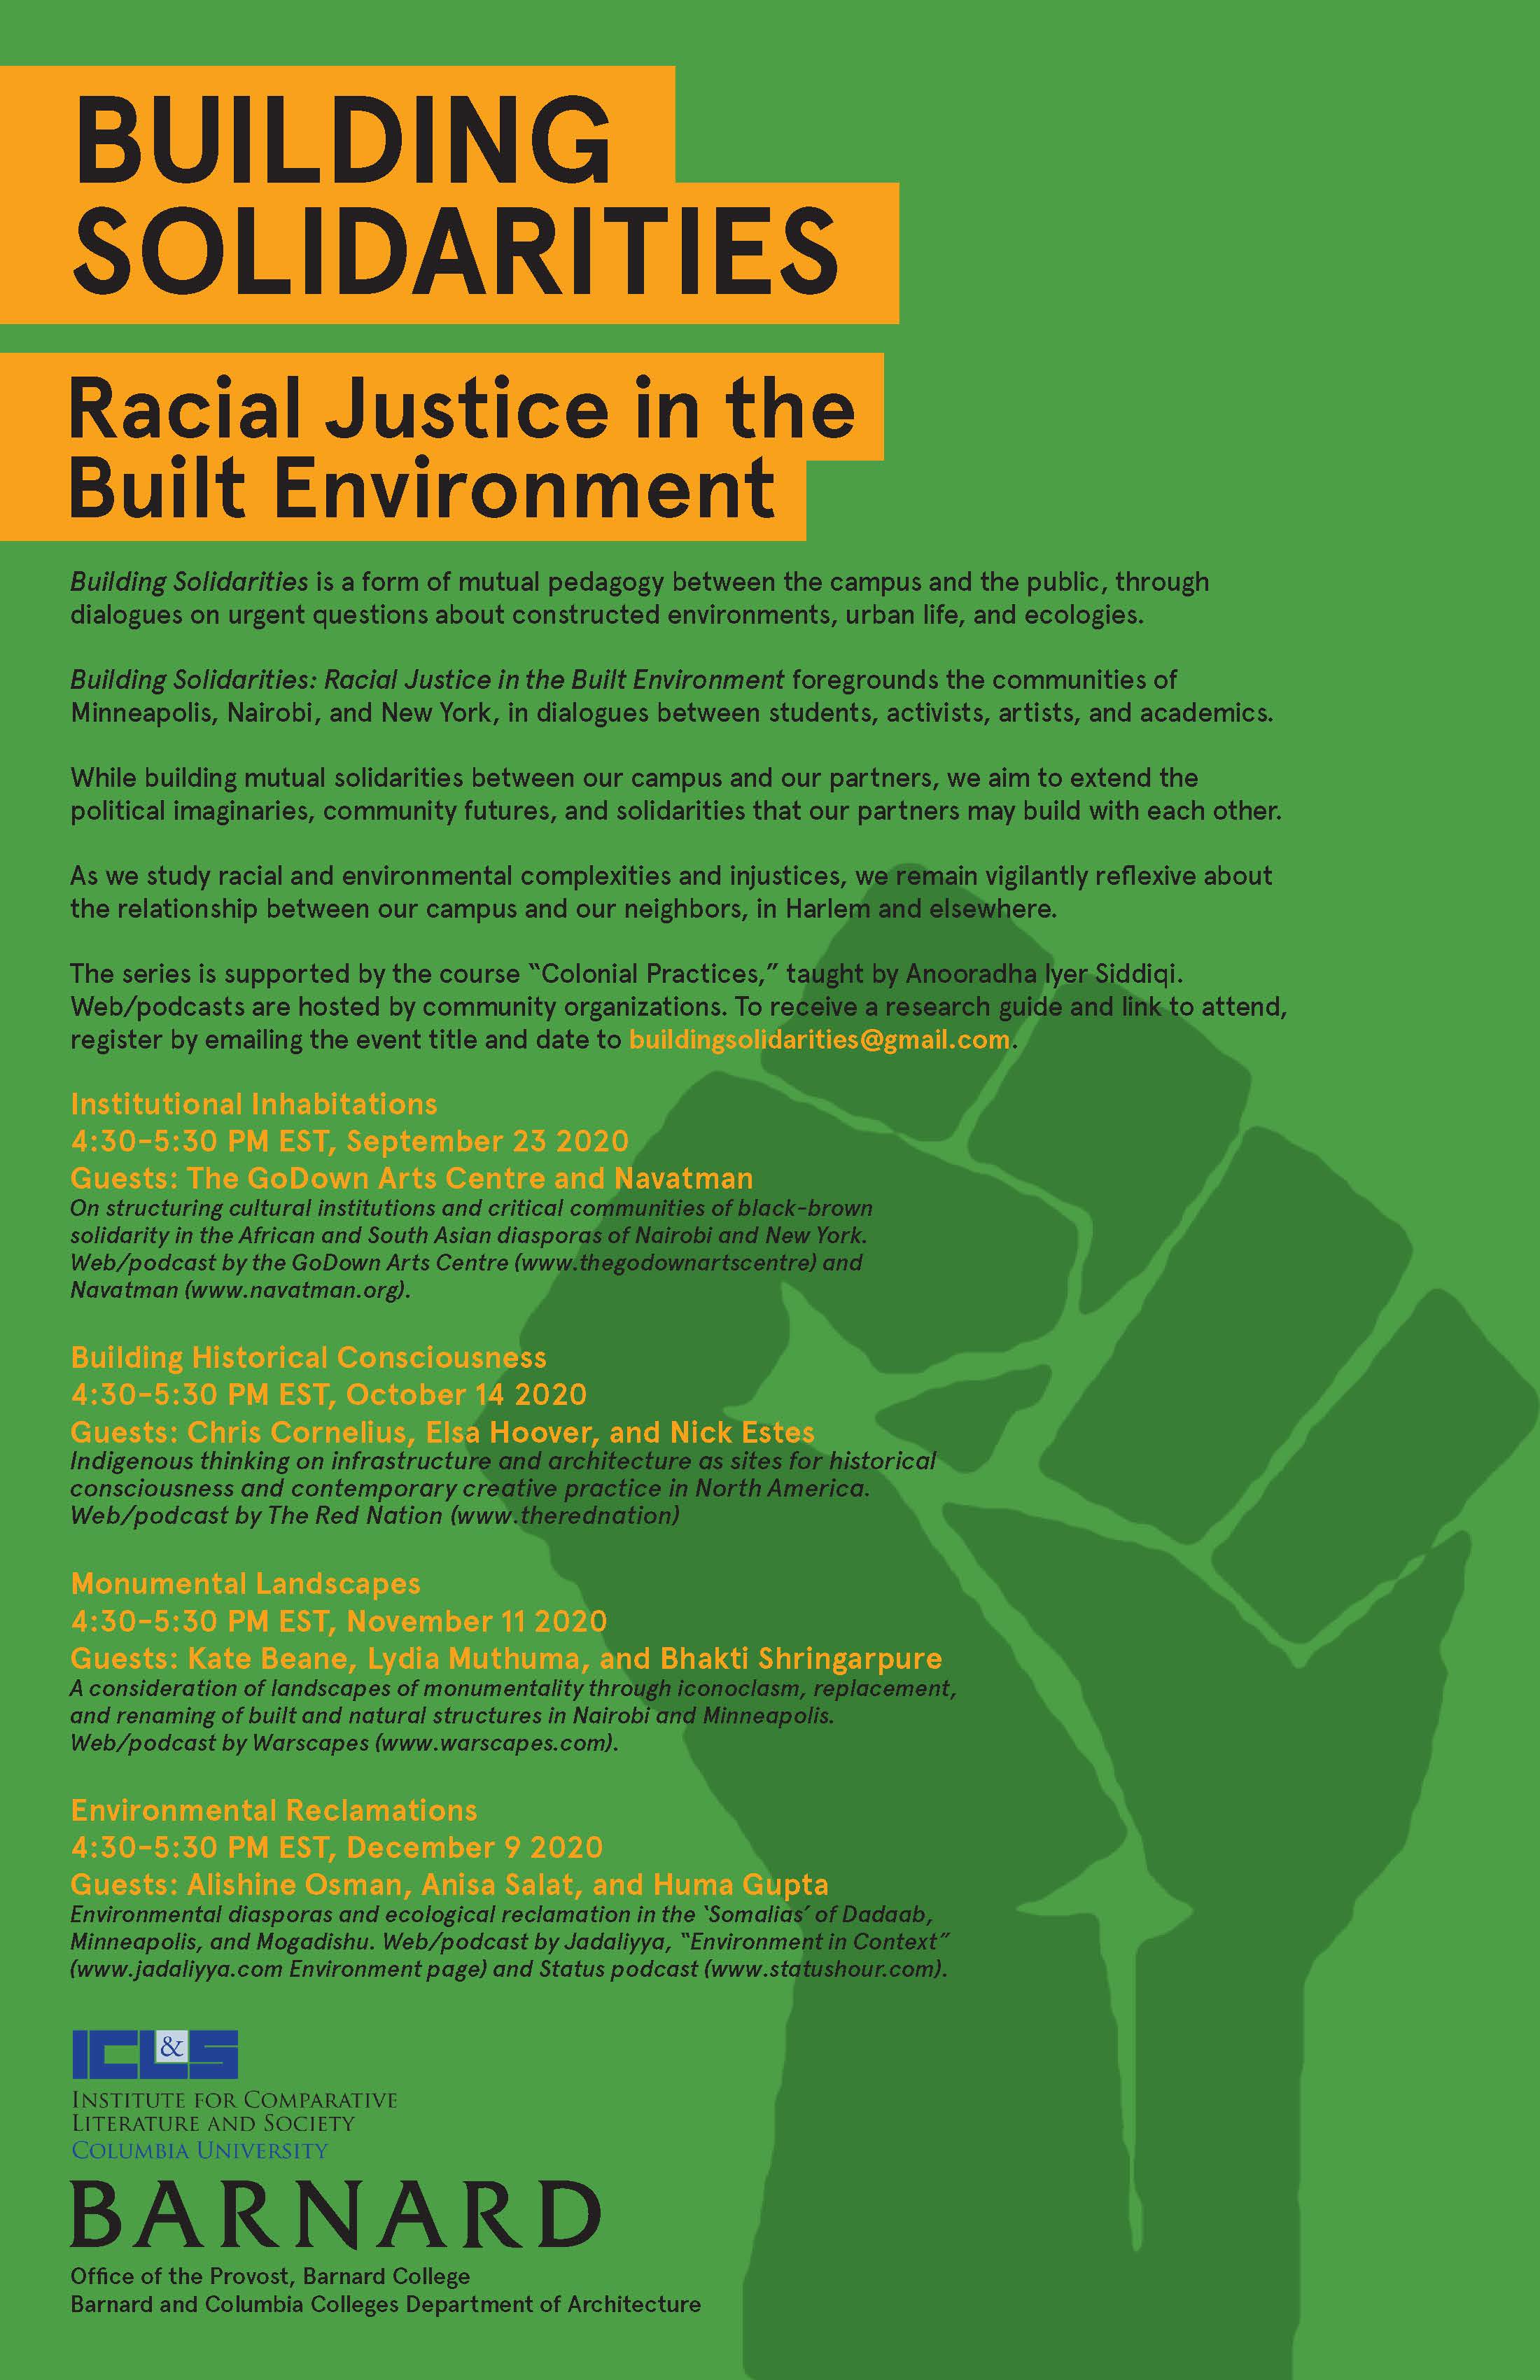 Building Solidarities poster